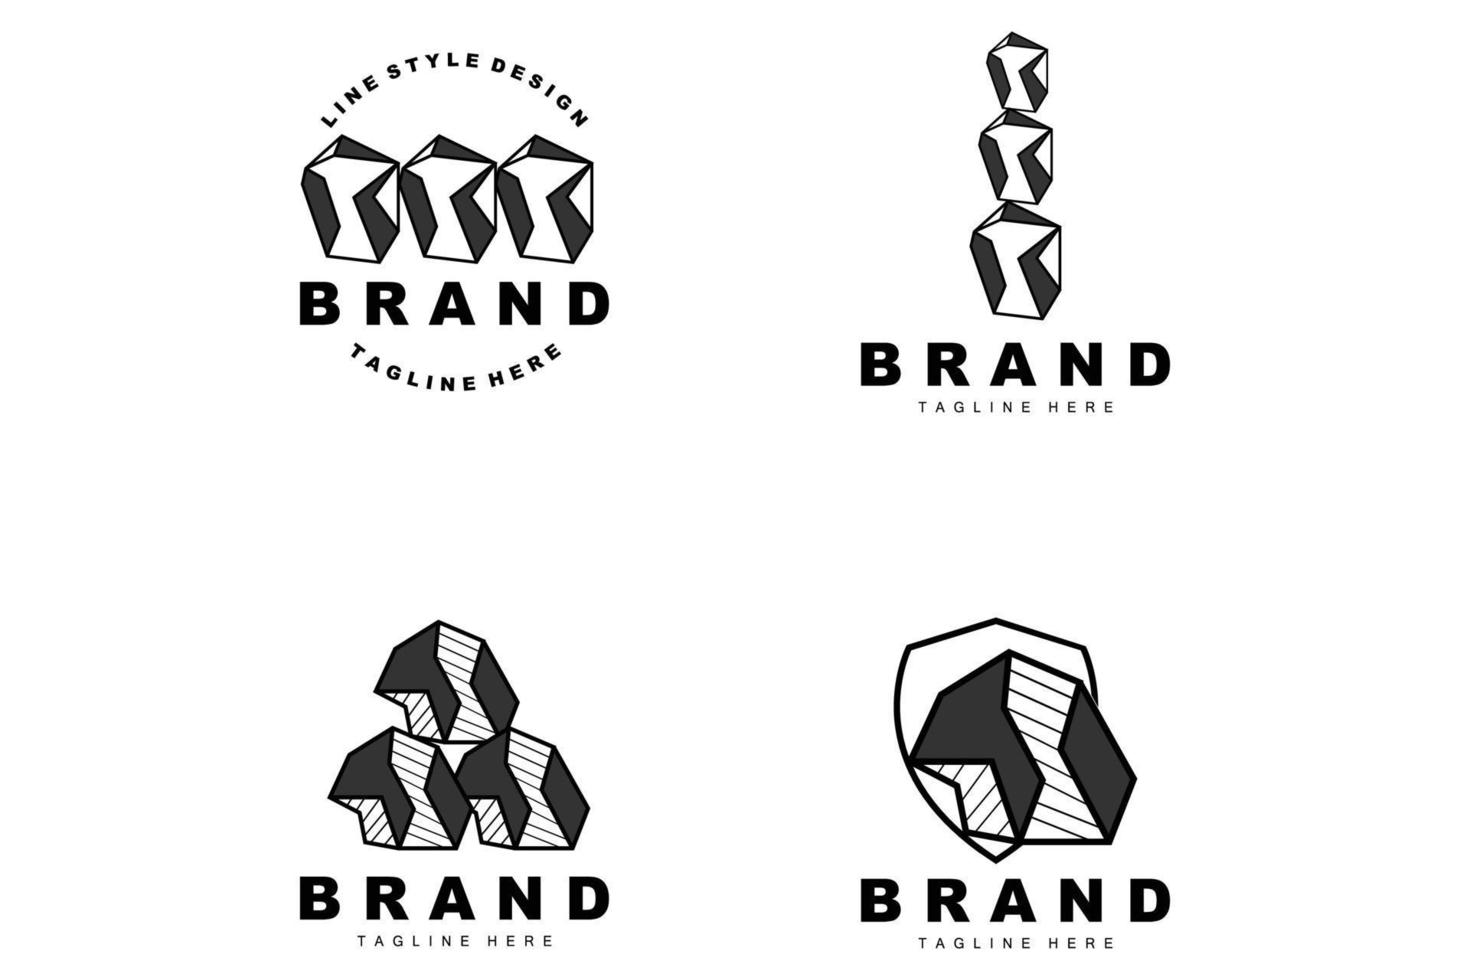 Stone Logo, Gem Line Stone Design, Diamond, Crystal, Simple Elegant, Product Brand Vector, Natural Stone Icon vector